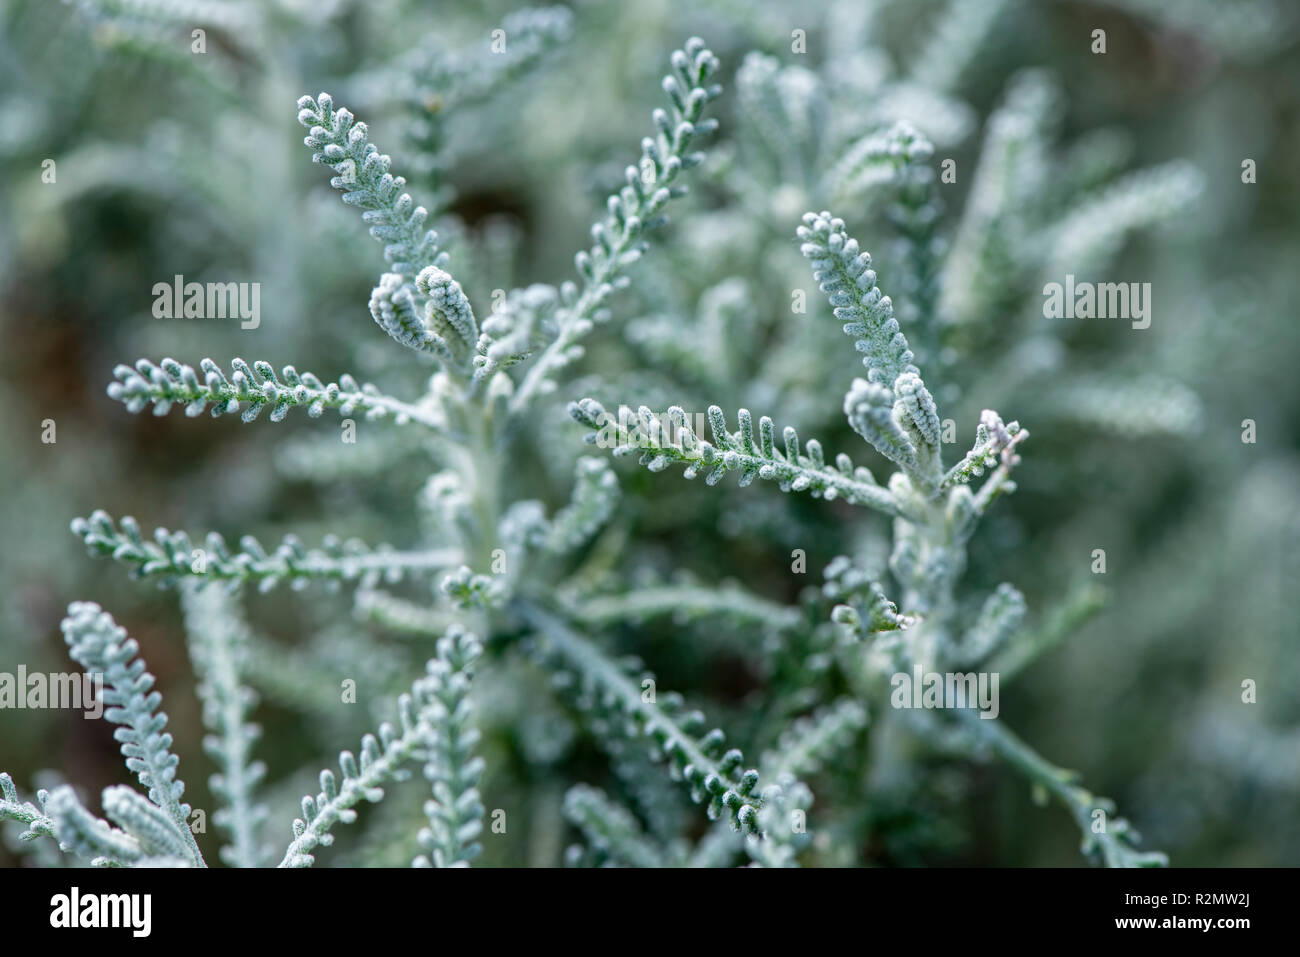 Grey santolina as a medicinal plant for natural medicine and herbal medicine Stock Photo